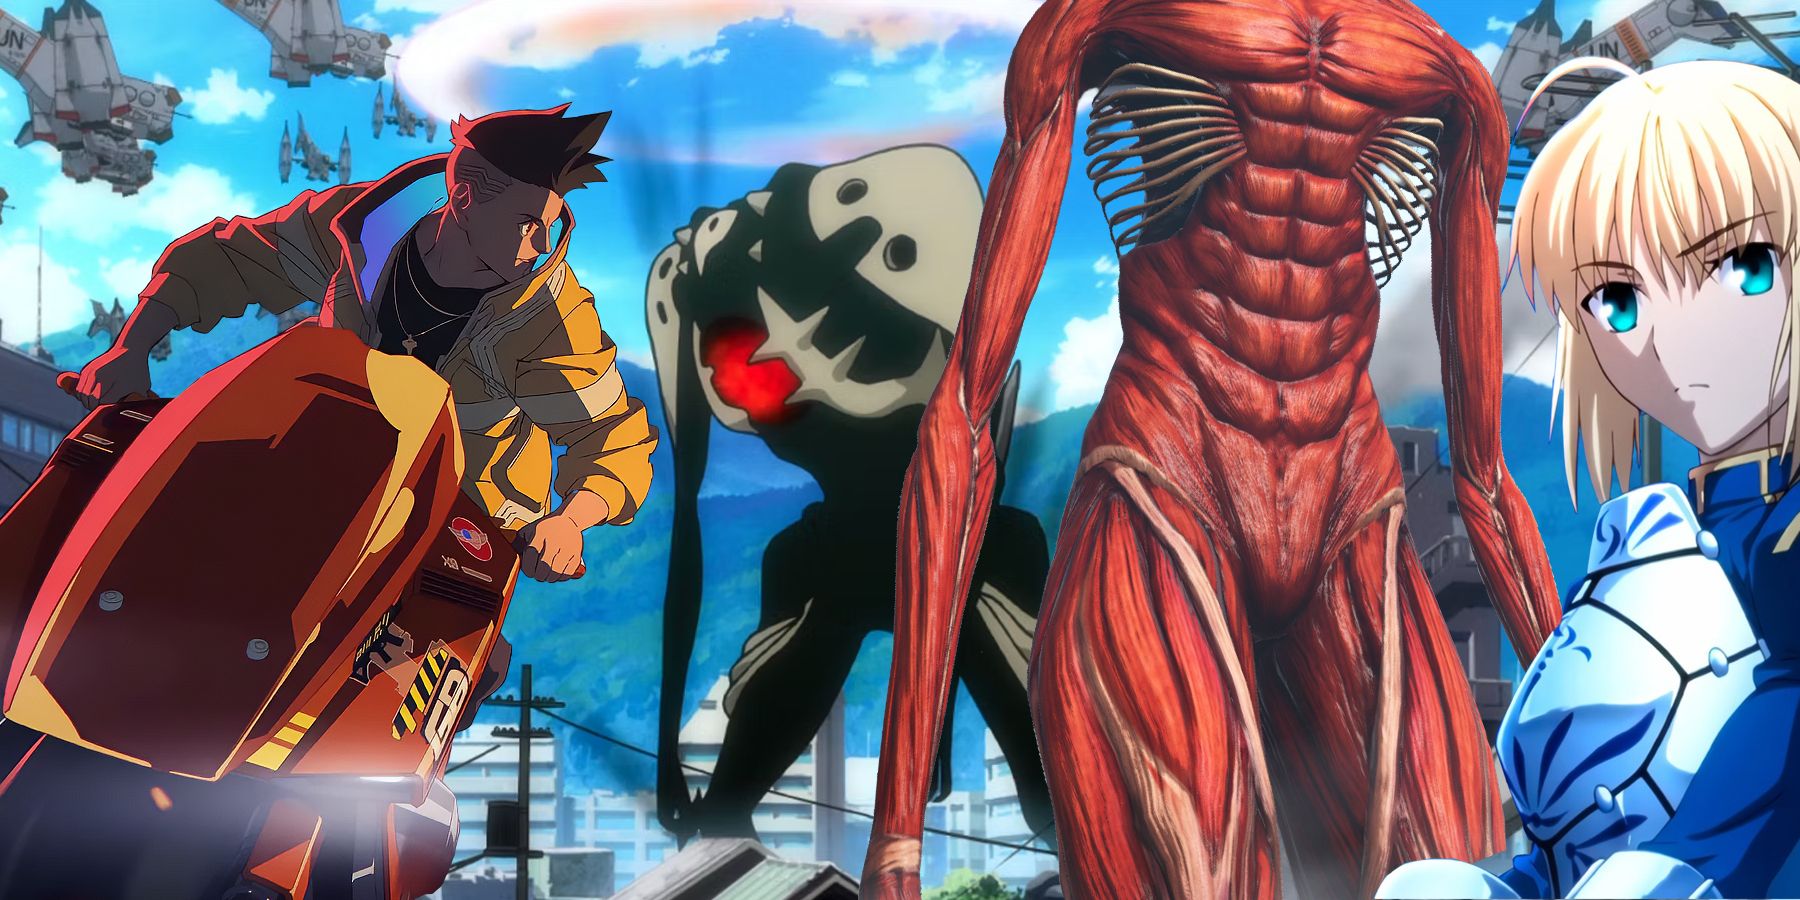 Amazon.com: POSTER STOP ONLINE Attack on Titan - Japanese Anime/Manga TV  Series Poster/Print (Shingeki no Kyojin) (Eren, Armin & Mikasa - Attacking)  (Size 24